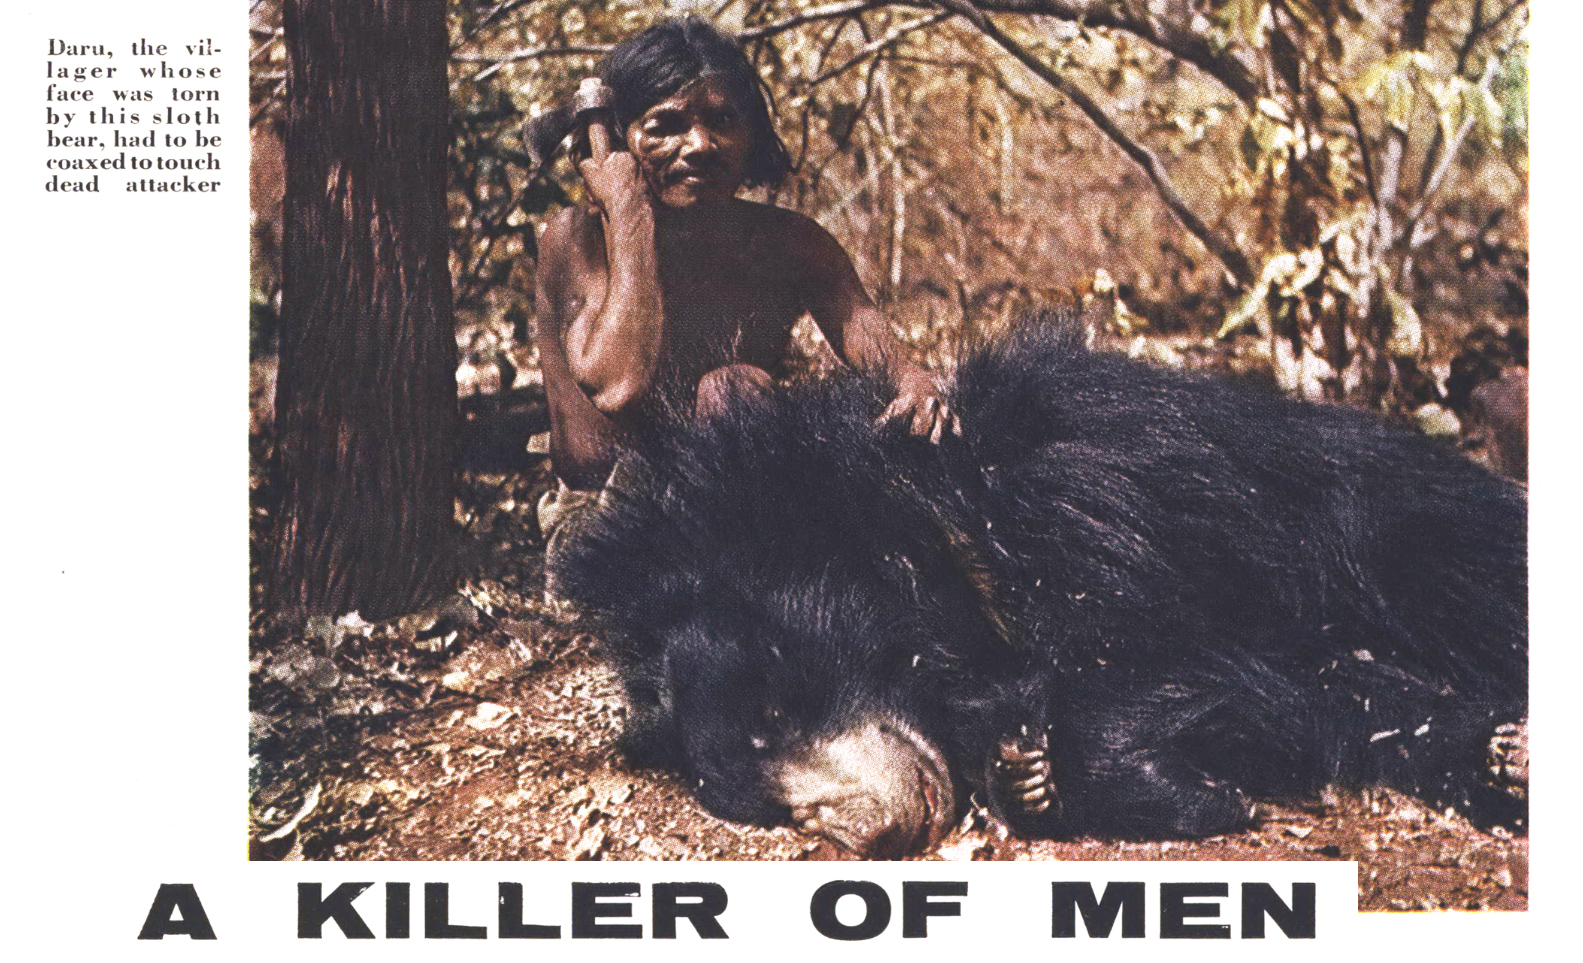 a killer sloth bear in India